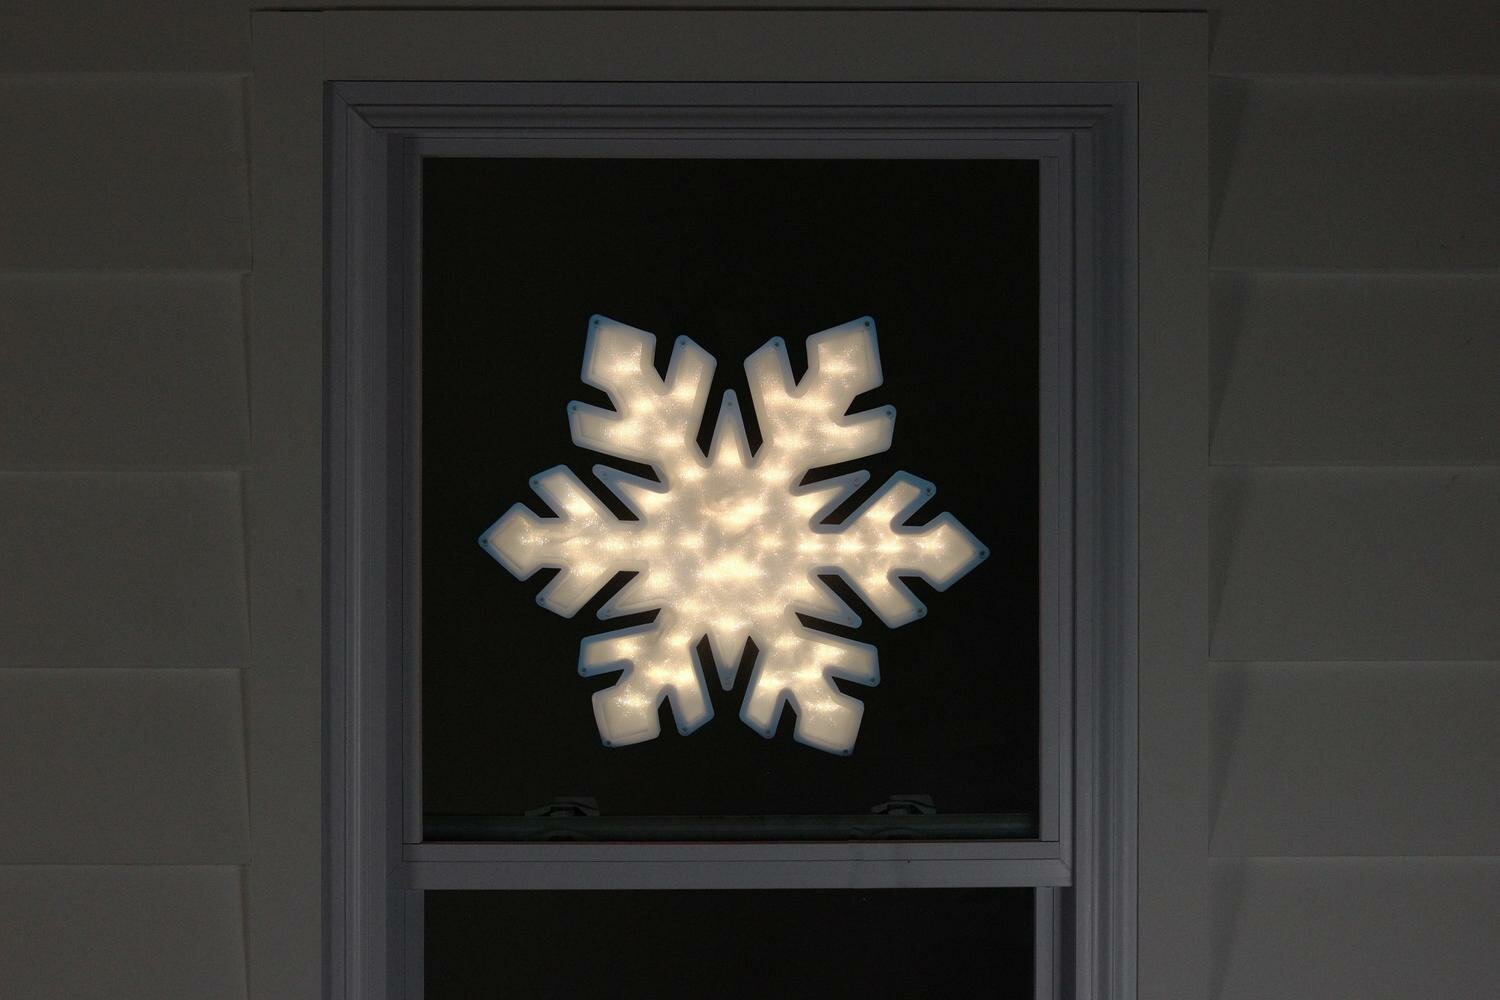 Snowflake Window Garlands